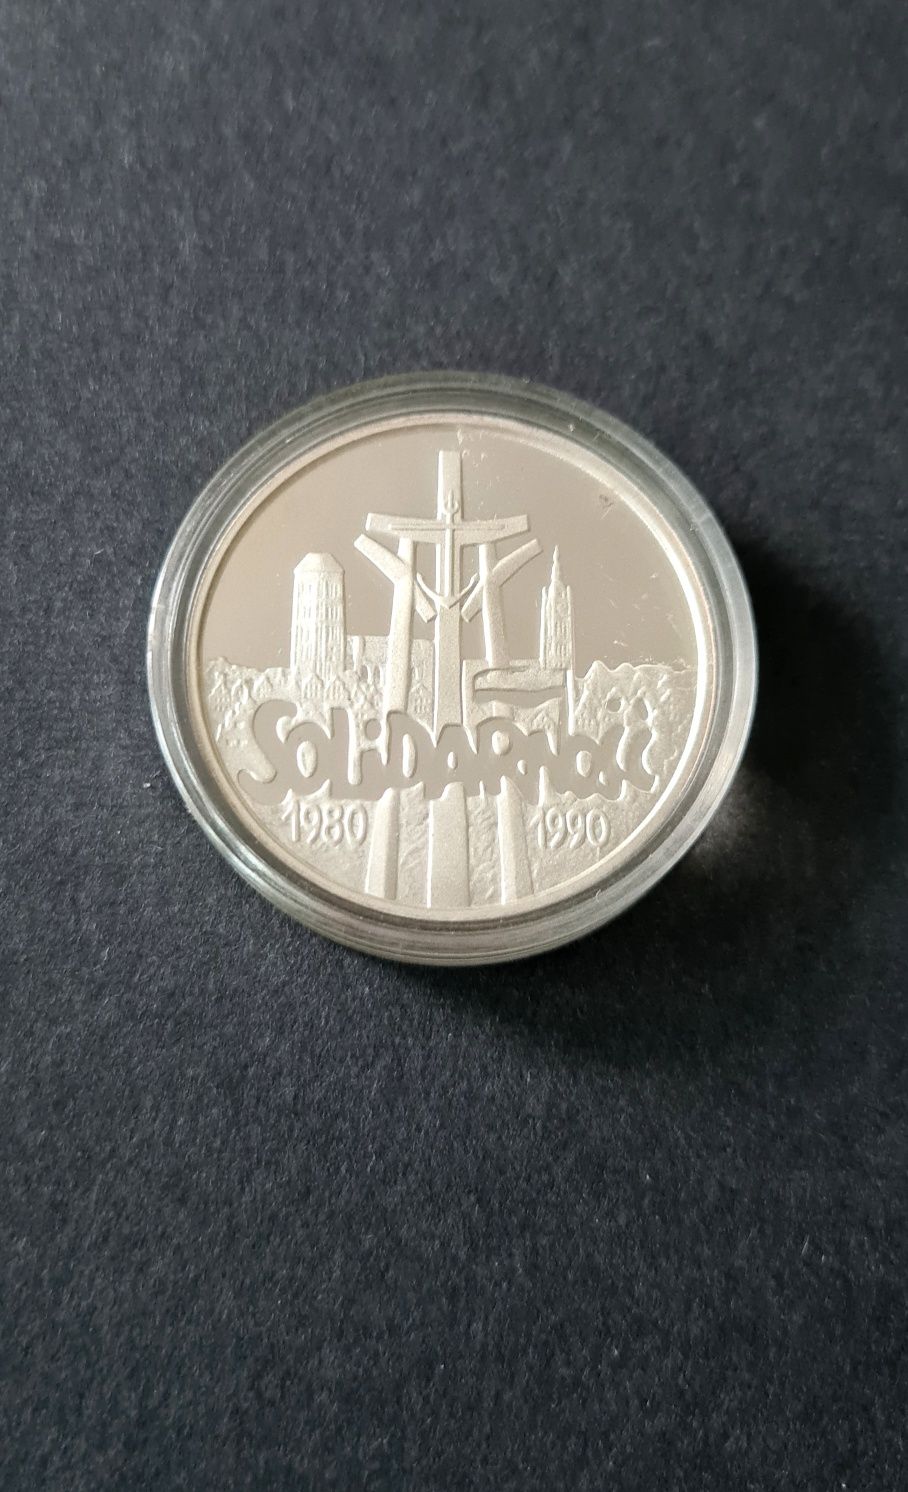 Srebrna moneta kolekcjonerska Solidarność 100000 Mała Gruba